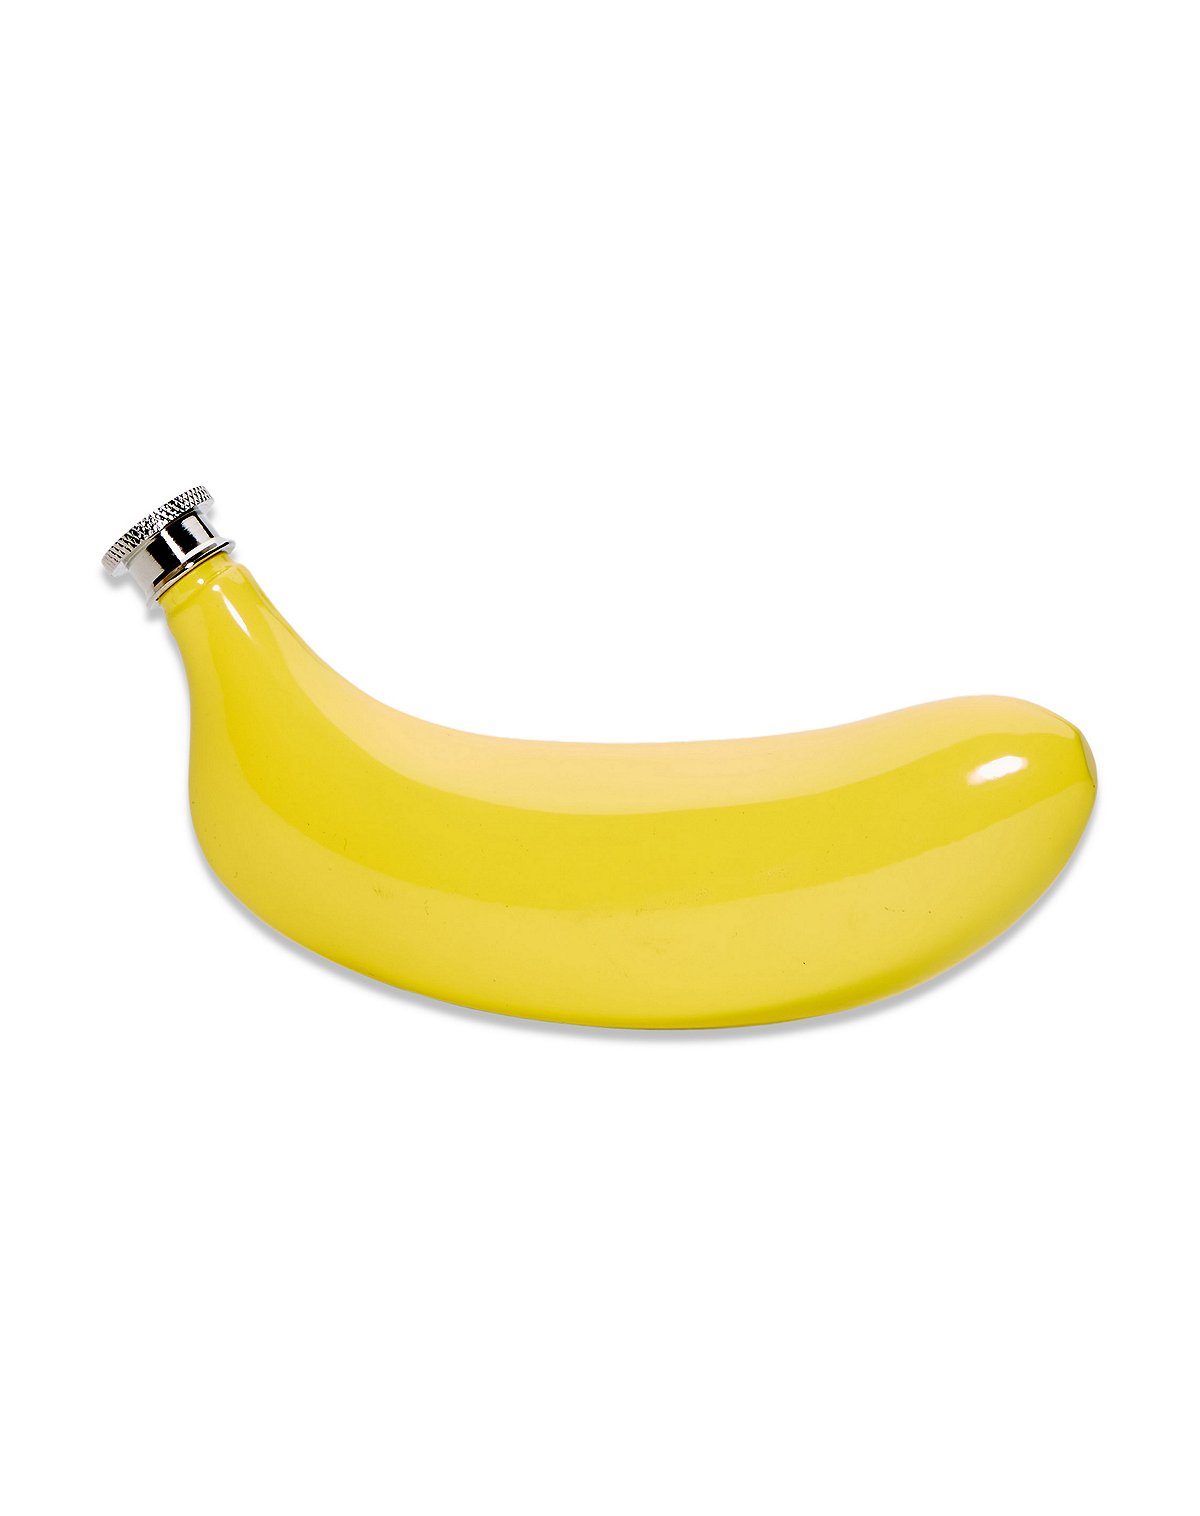 banana discreet hidden flask alcohol booze